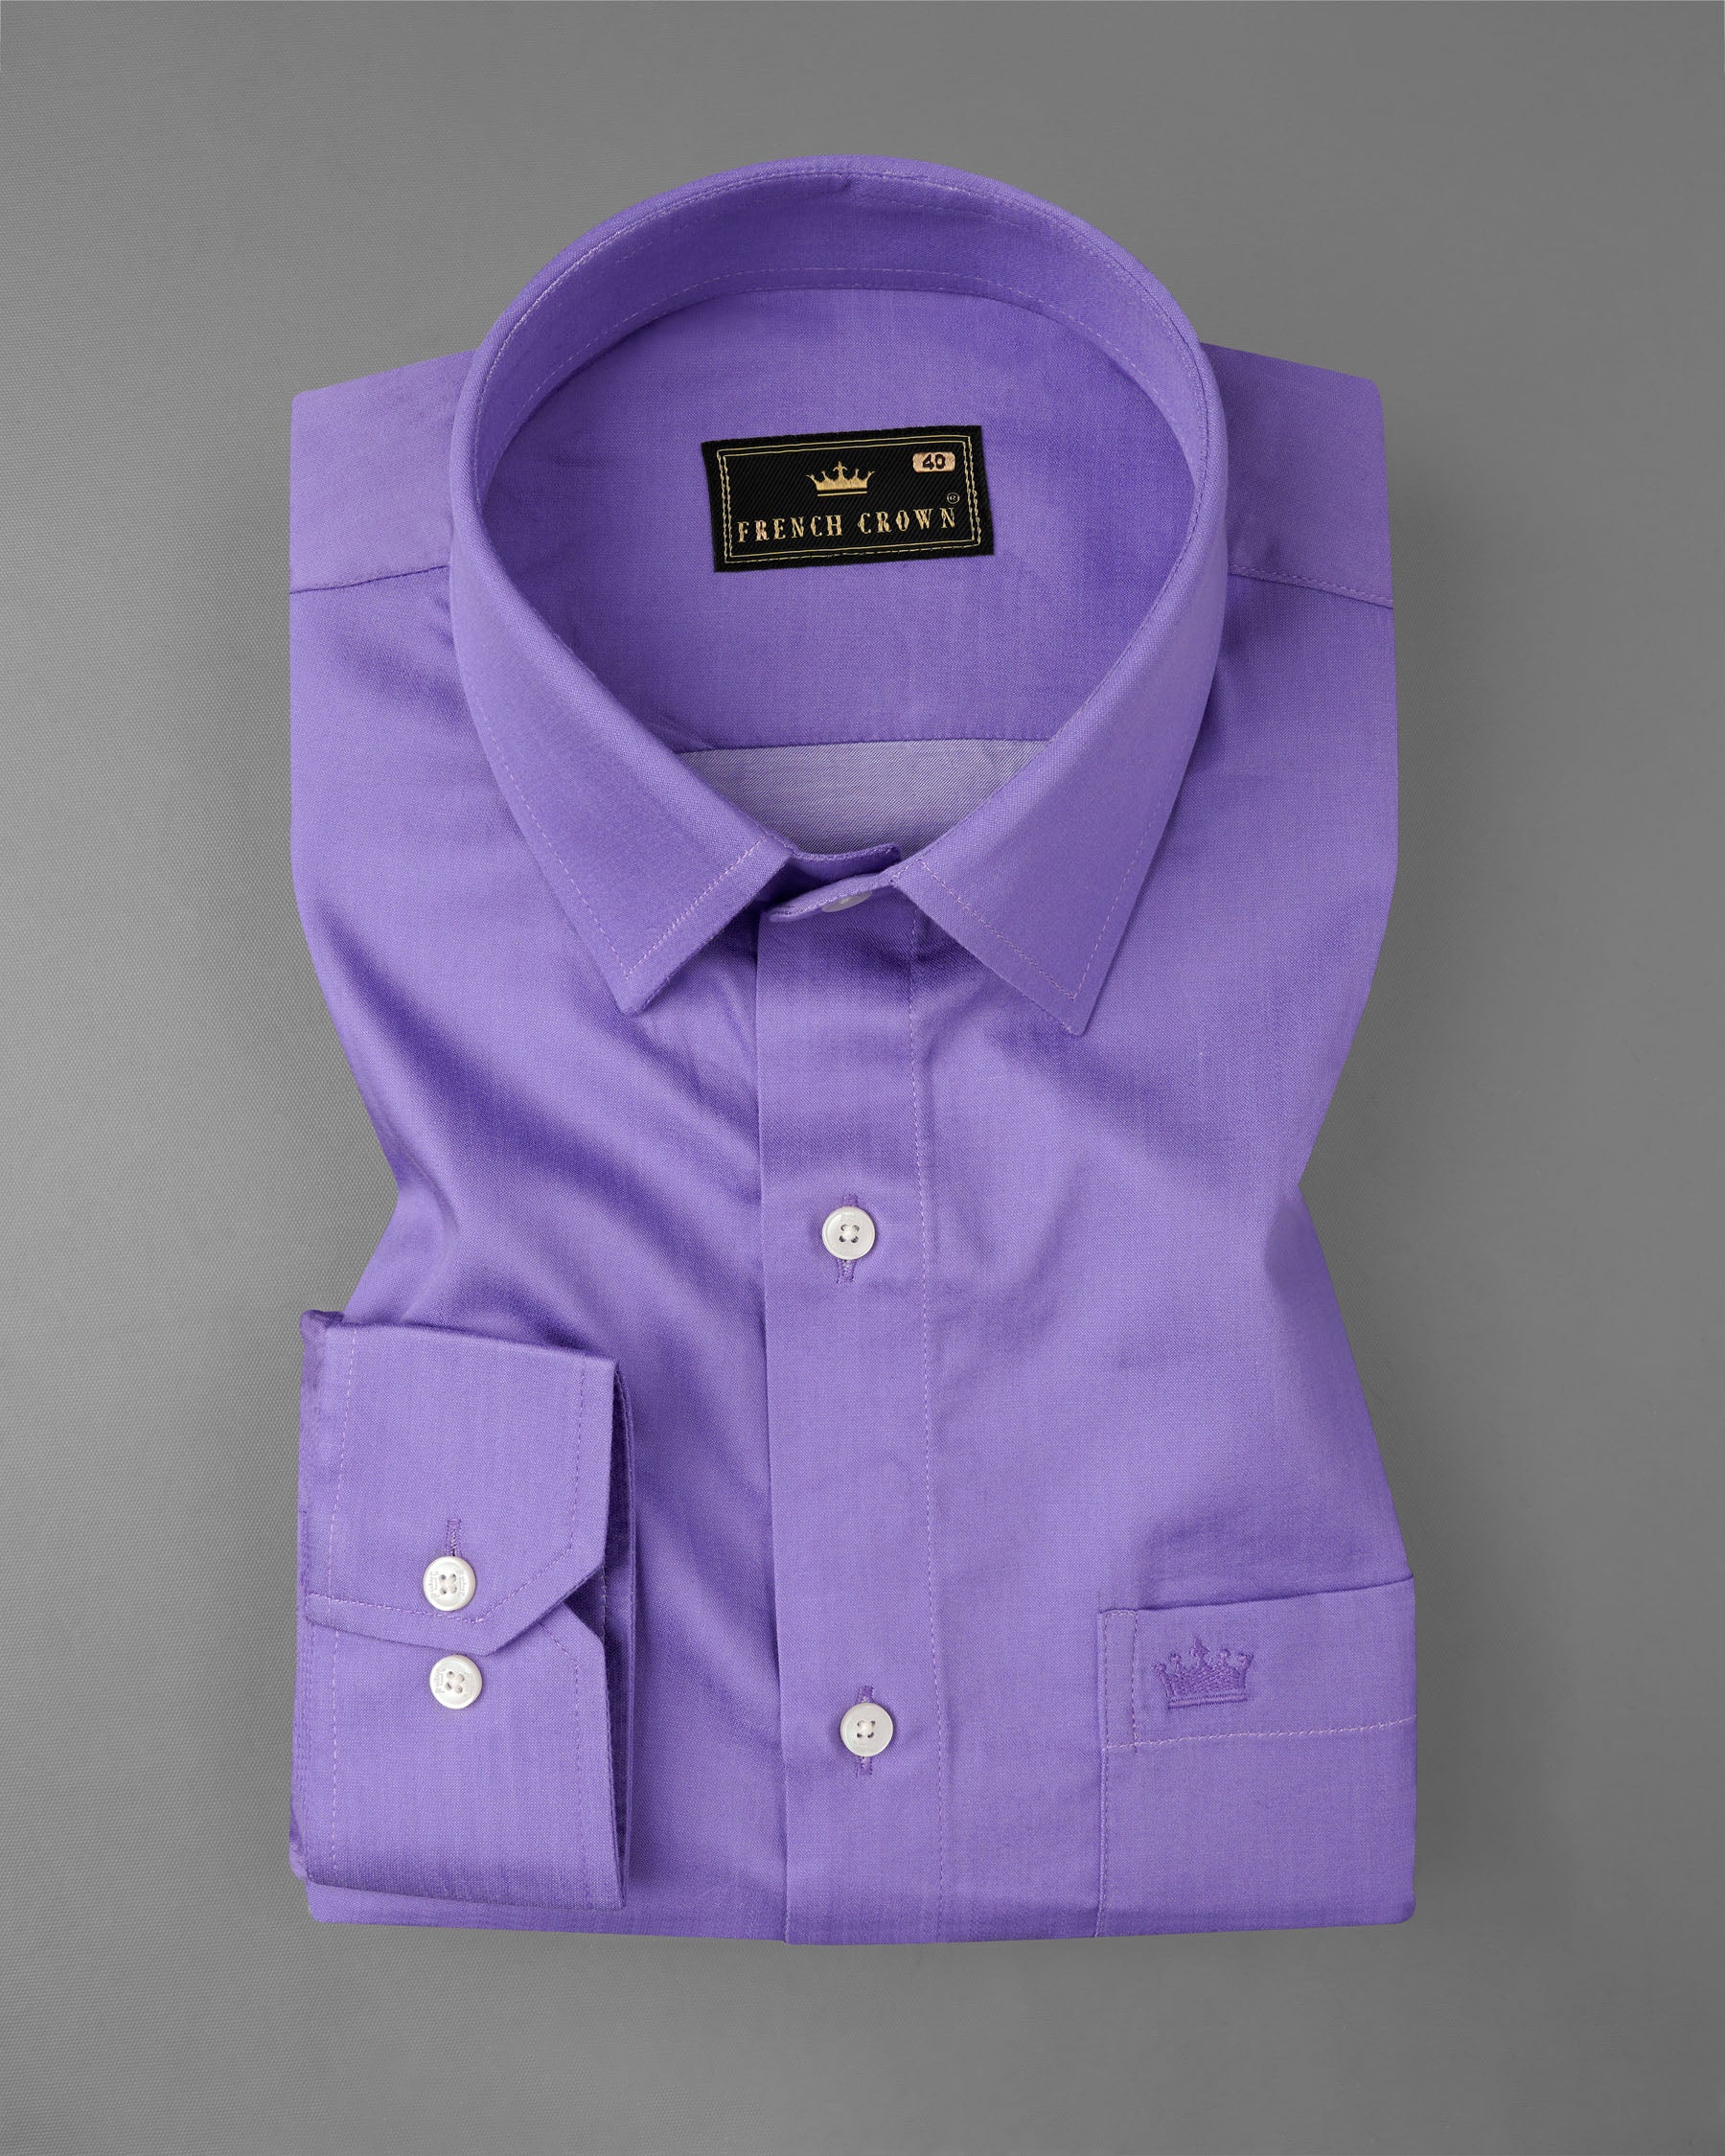 Yonder Violet Super Soft Premium Cotton Shirt 7670-38, 7670-H-38, 7670-39,7670-H-39, 7670-40, 7670-H-40, 7670-42, 7670-H-42, 7670-44, 7670-H-44, 7670-46, 7670-H-46, 7670-48, 7670-H-48, 7670-50, 7670-H-50, 7670-52, 7670-H-52